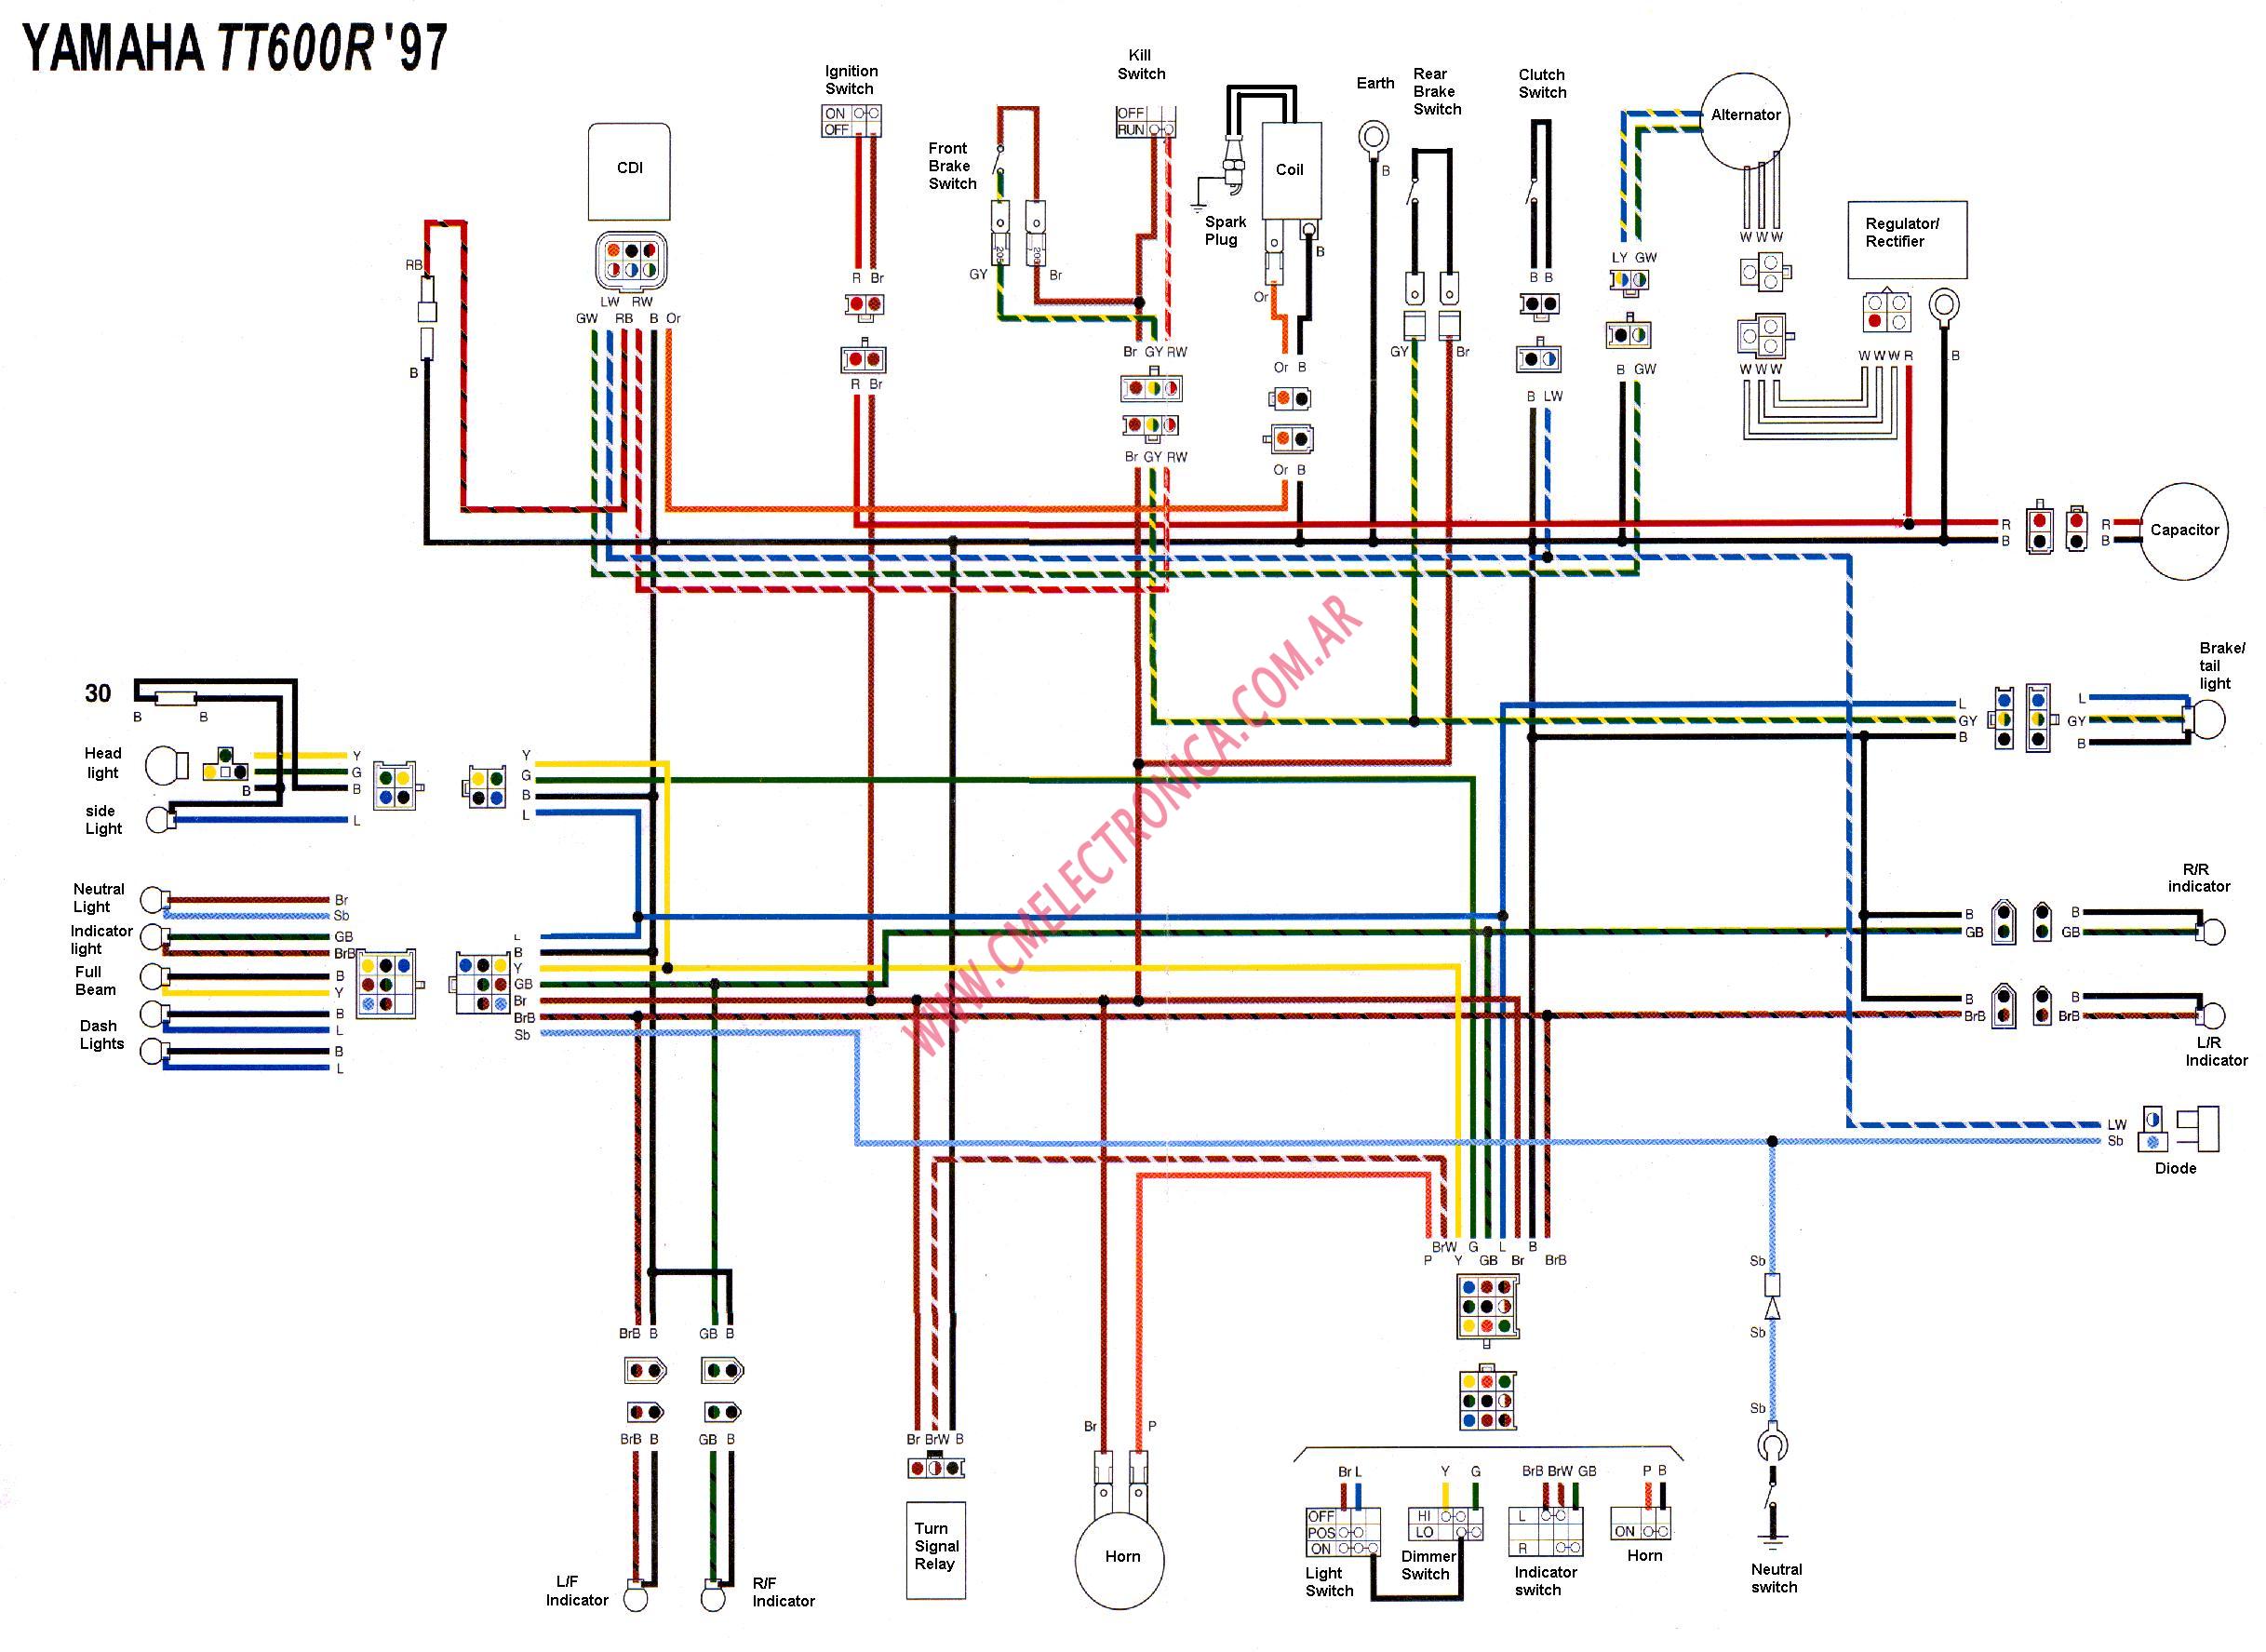 http://www.cmelectronica.com.ar/wiring-diagram/imagenes/yamaha-tt600r_97.jpg